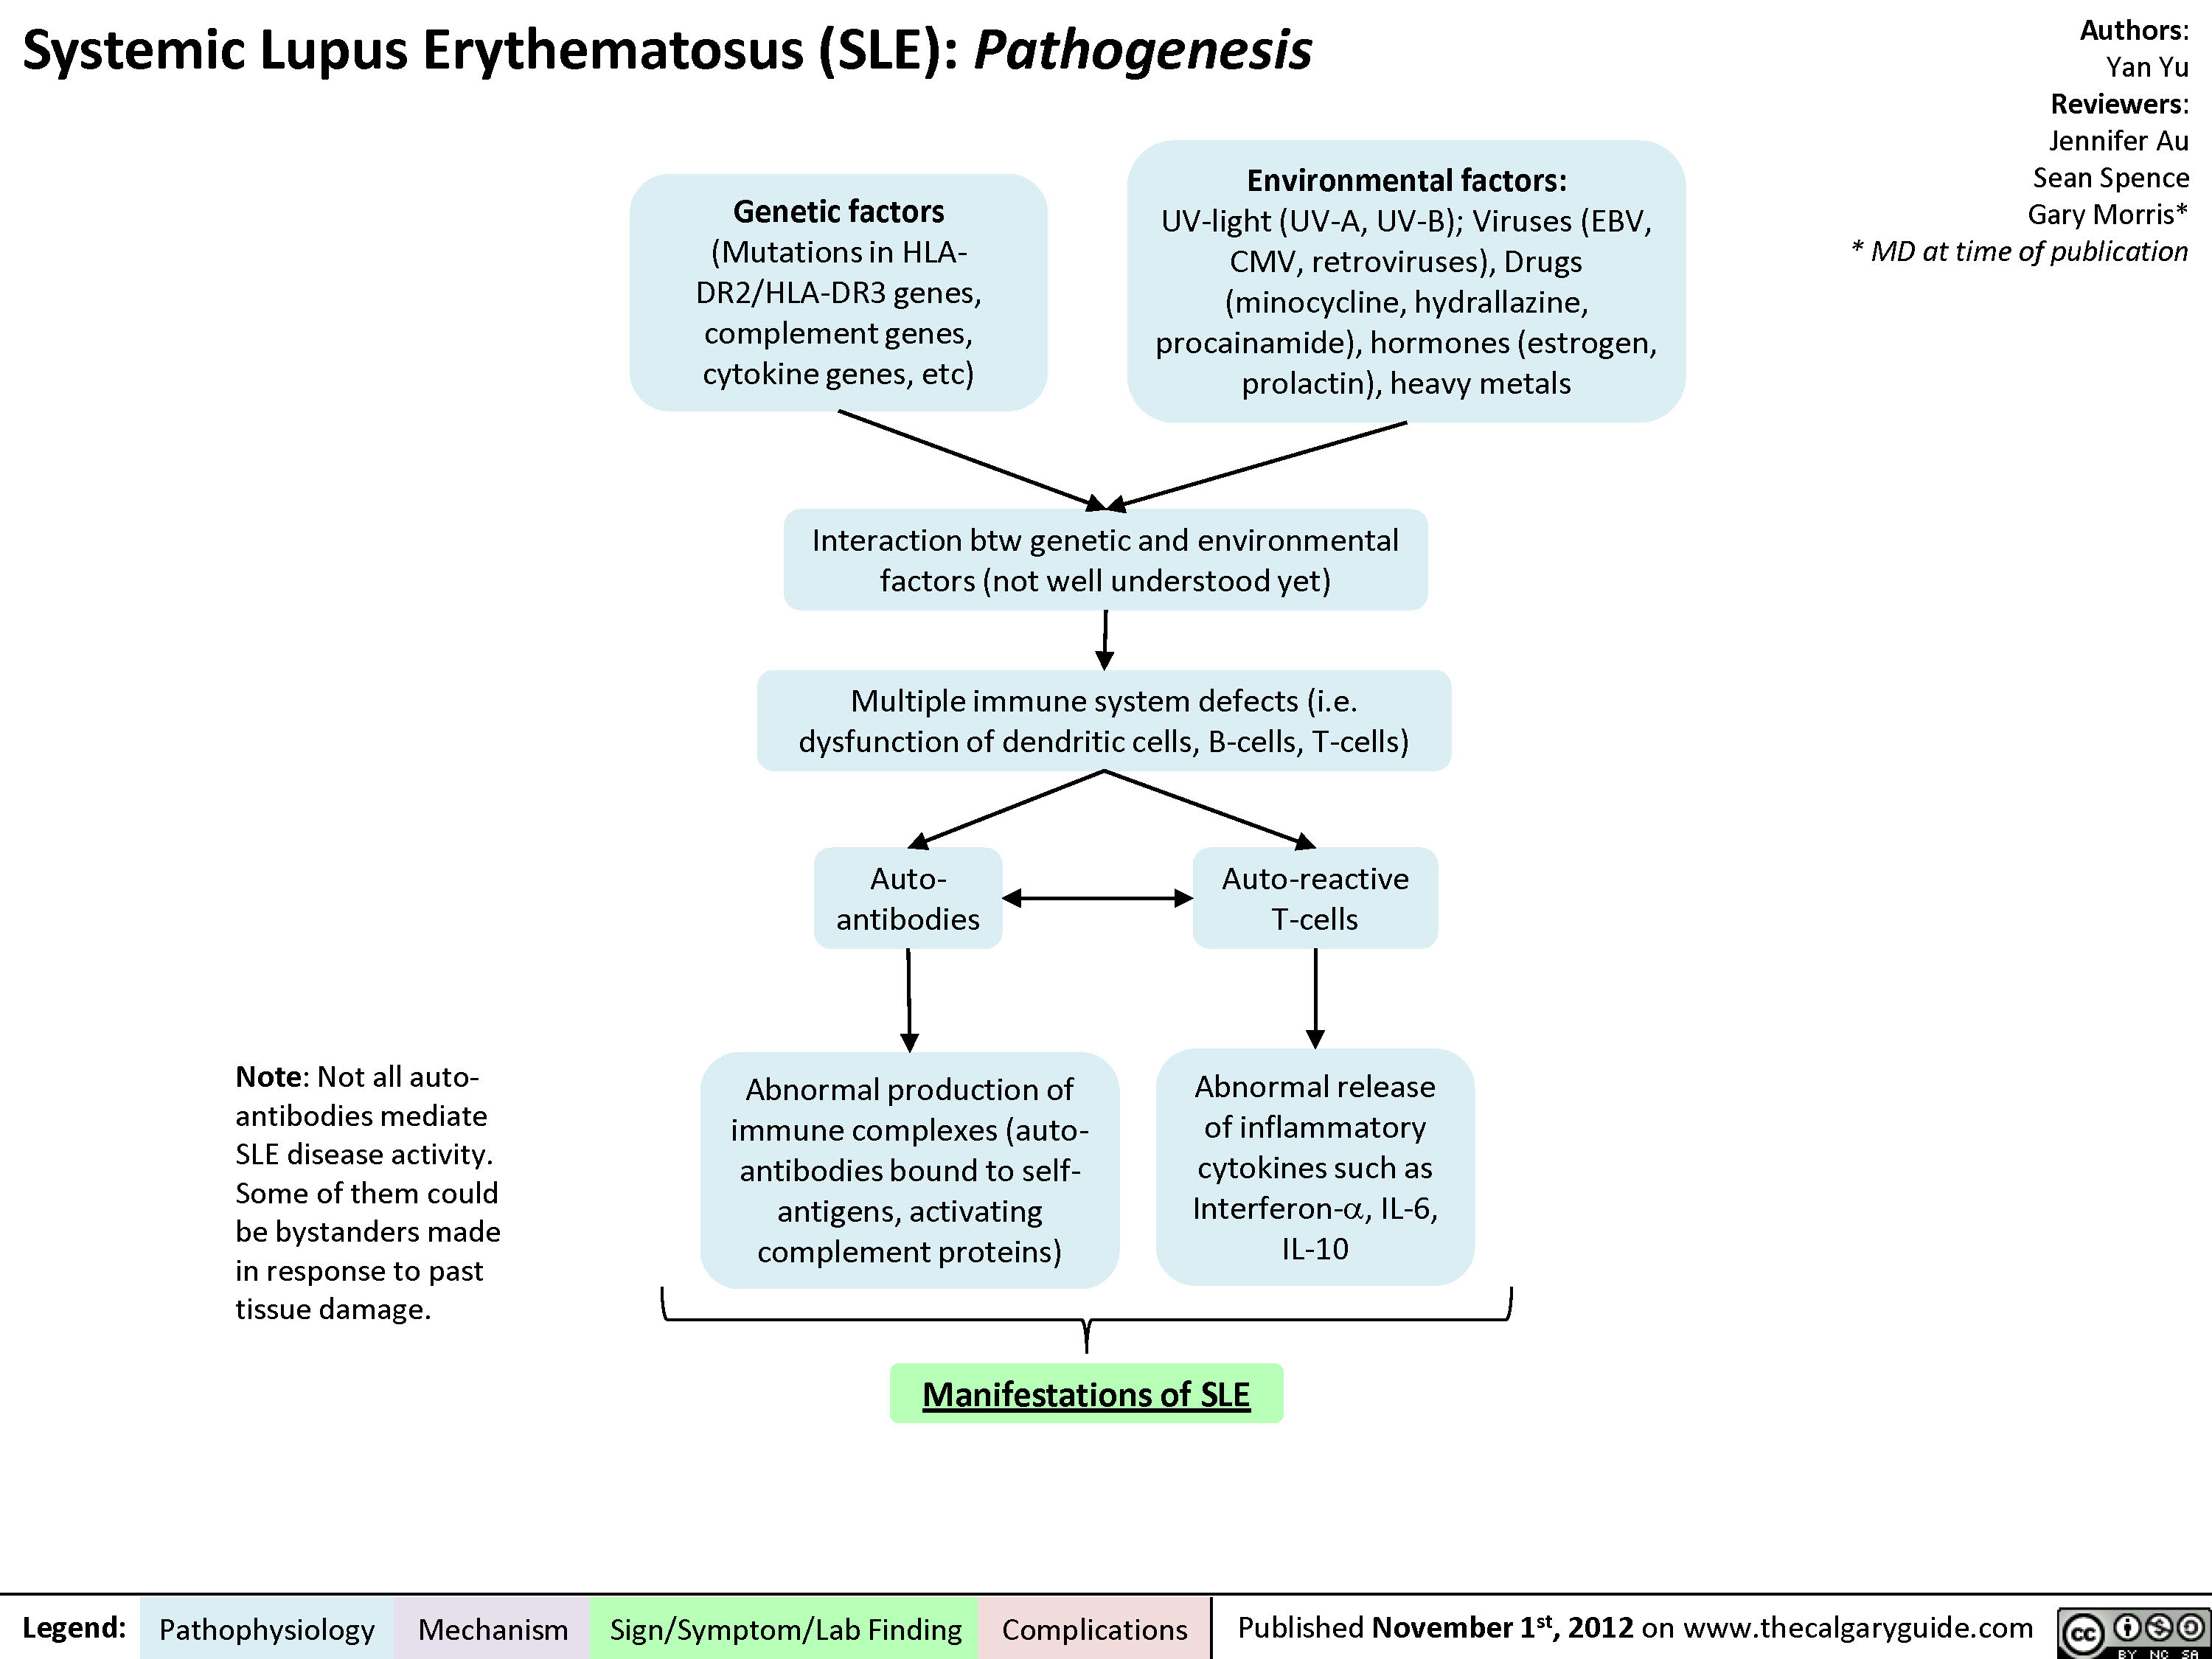 Patofisiologi Lupus